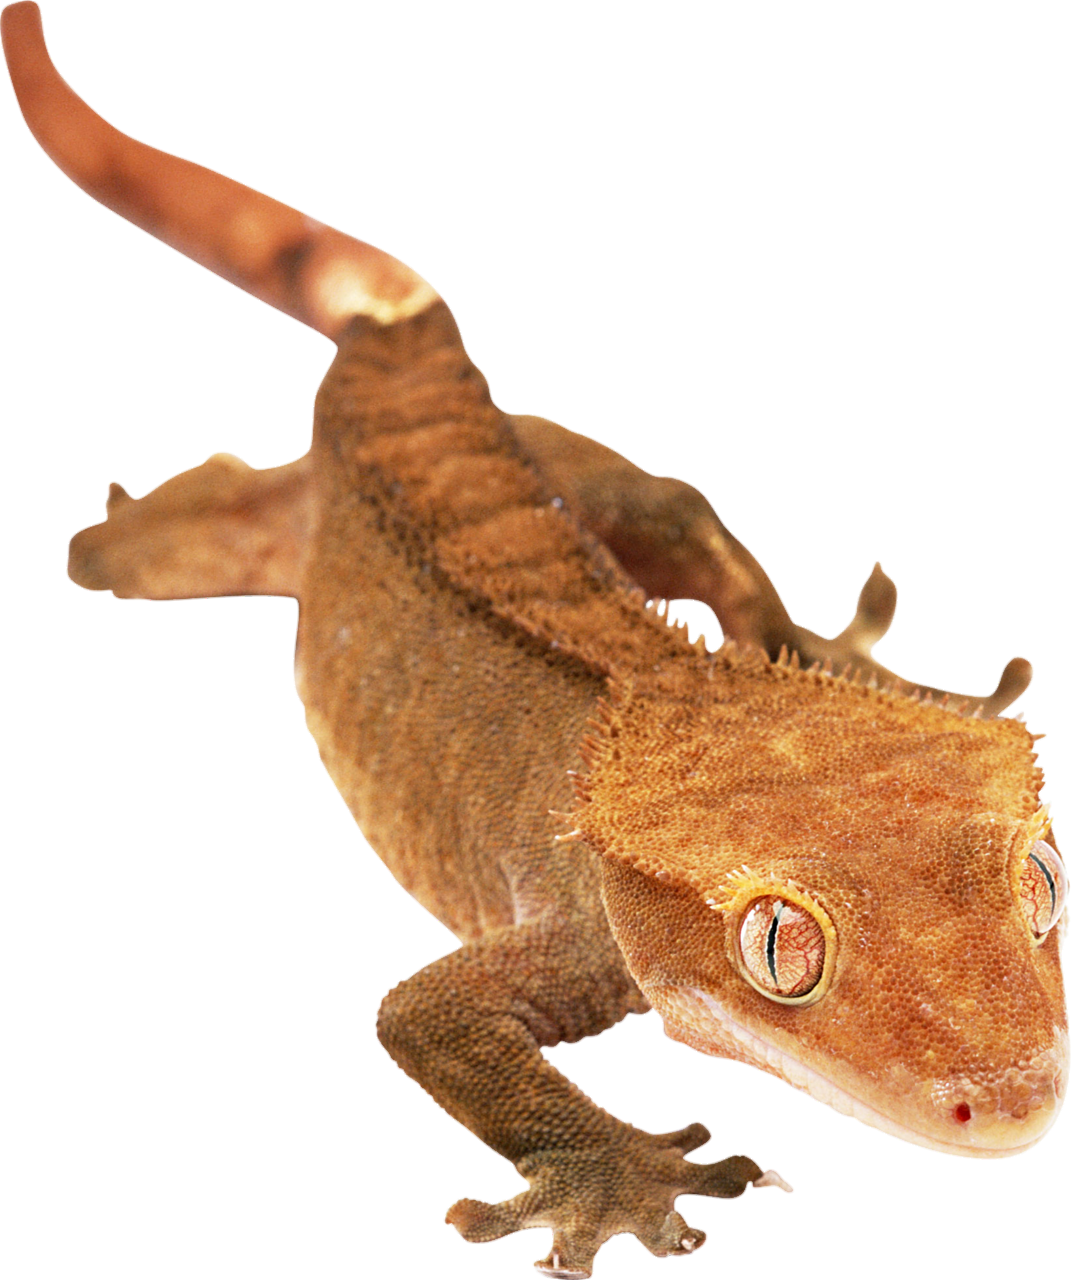 Gecko-2